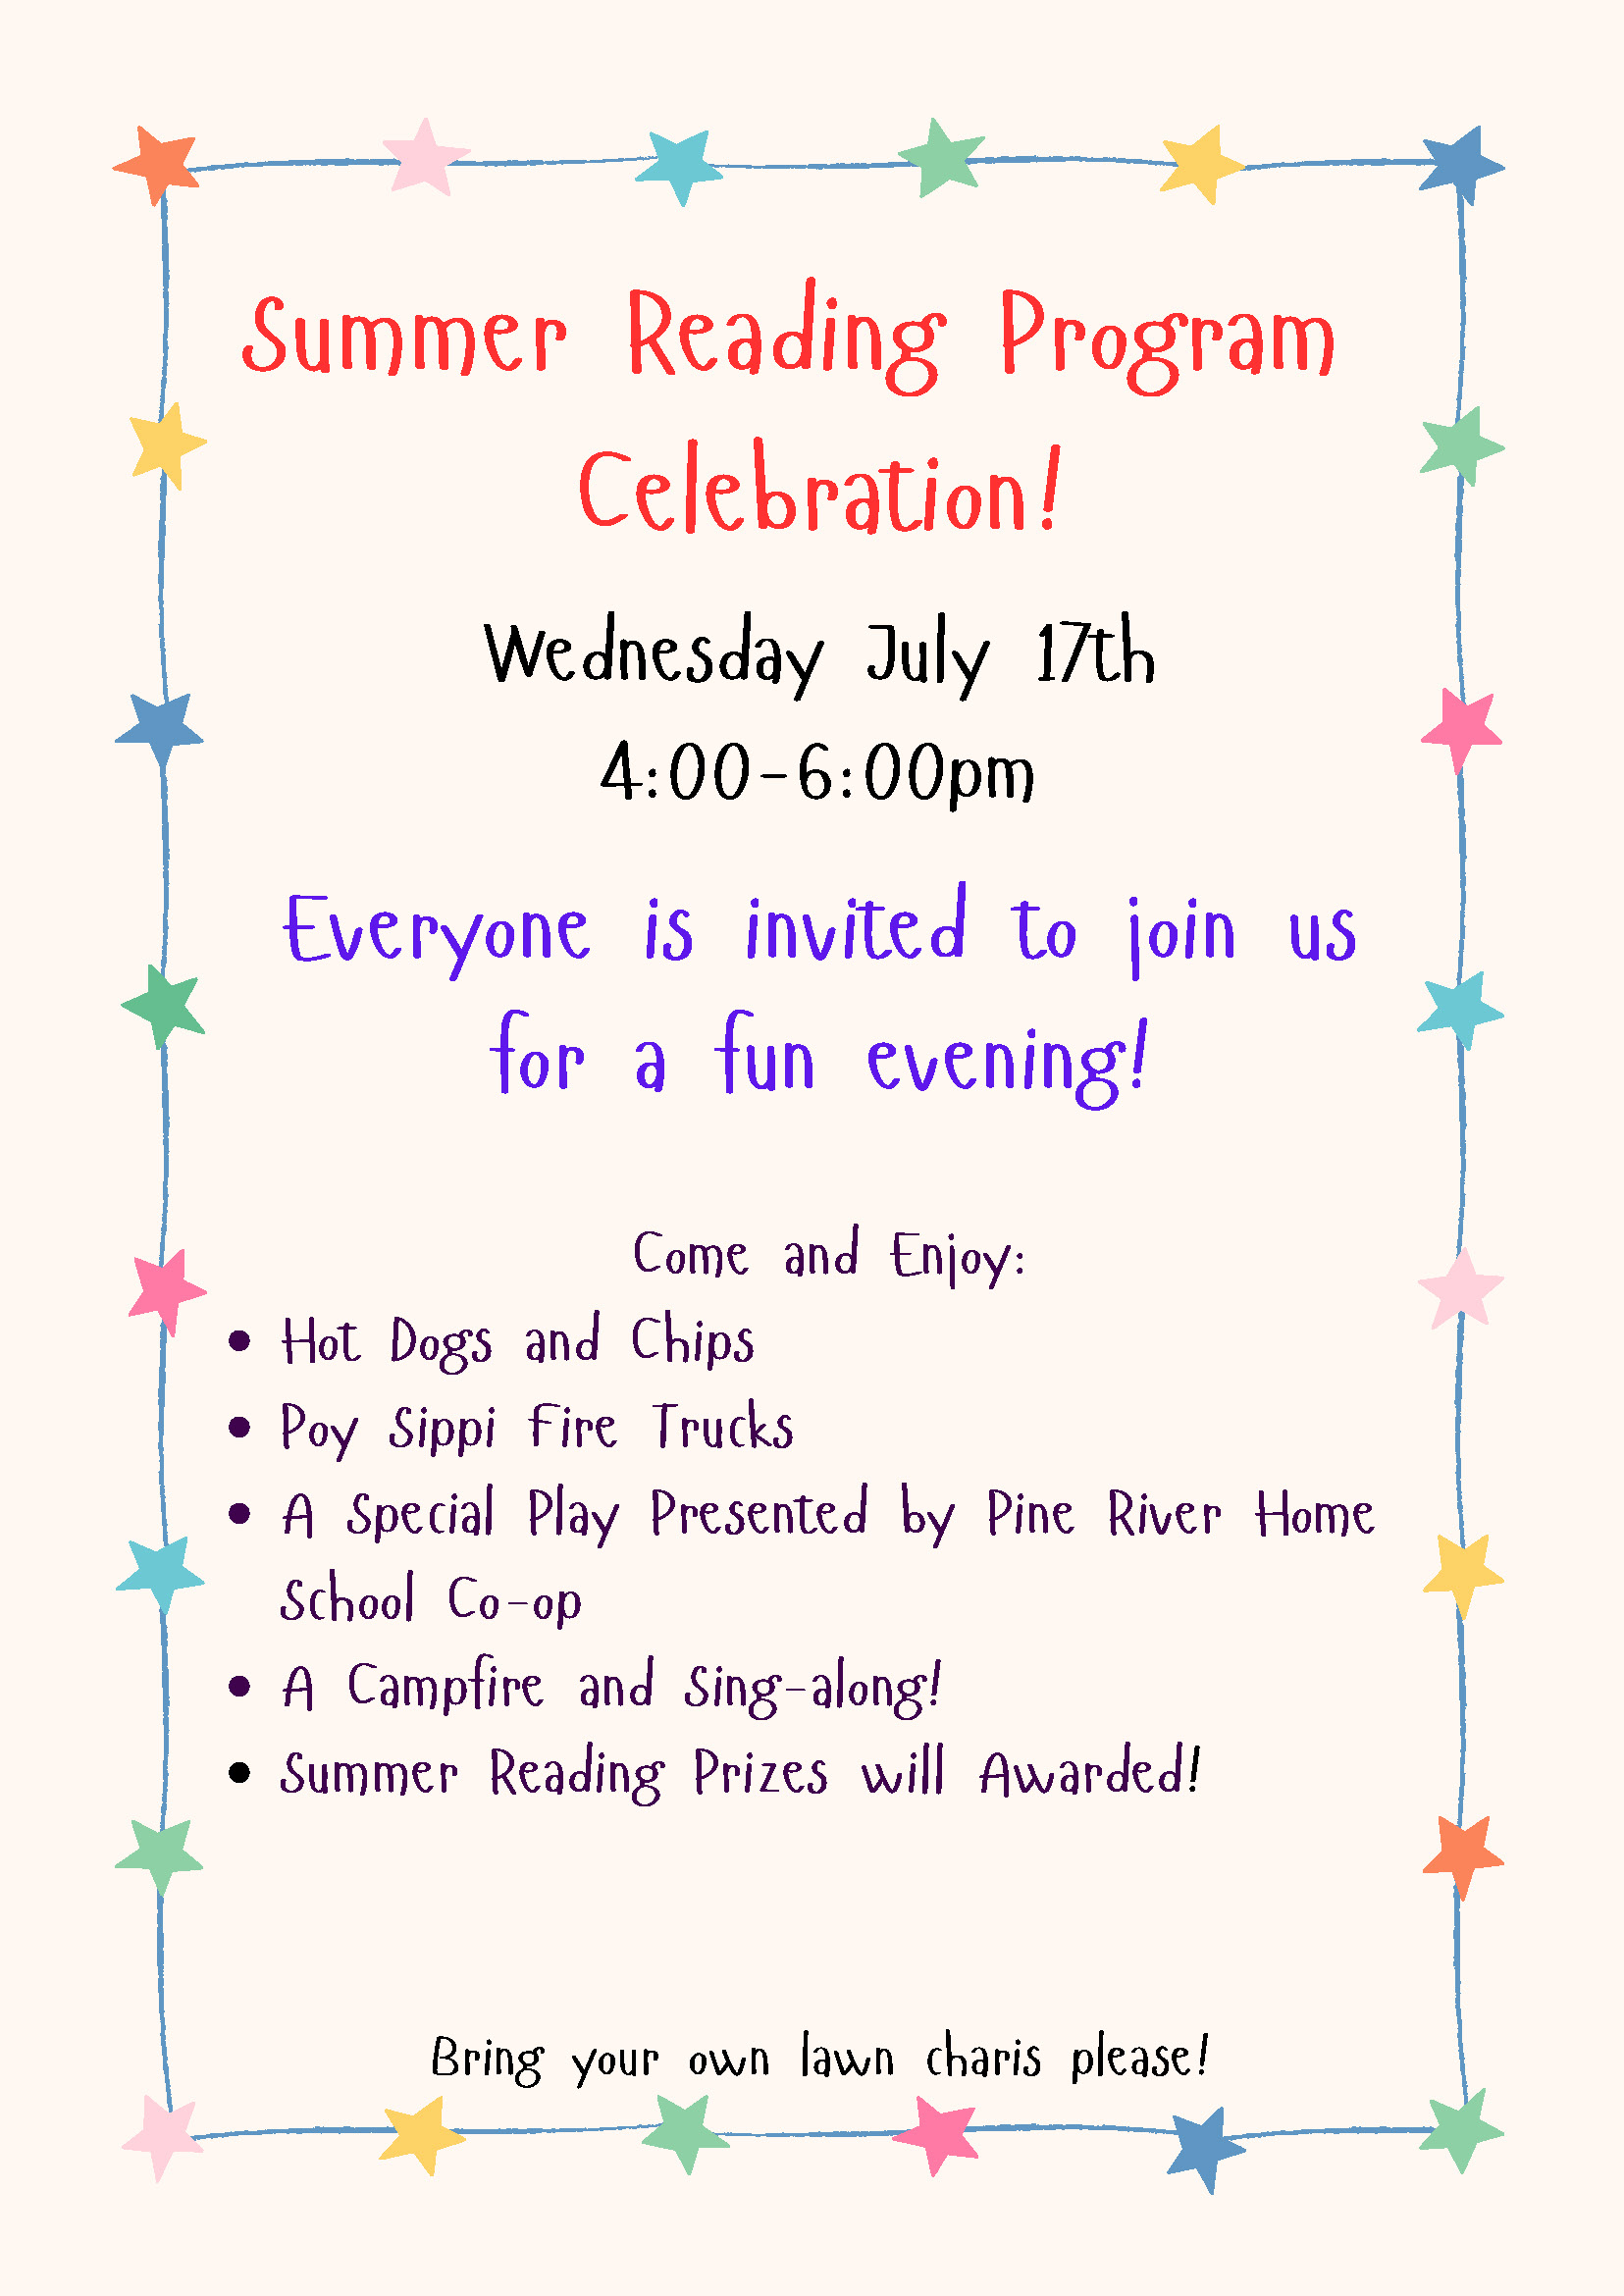 Summer Reading Program Celebration!